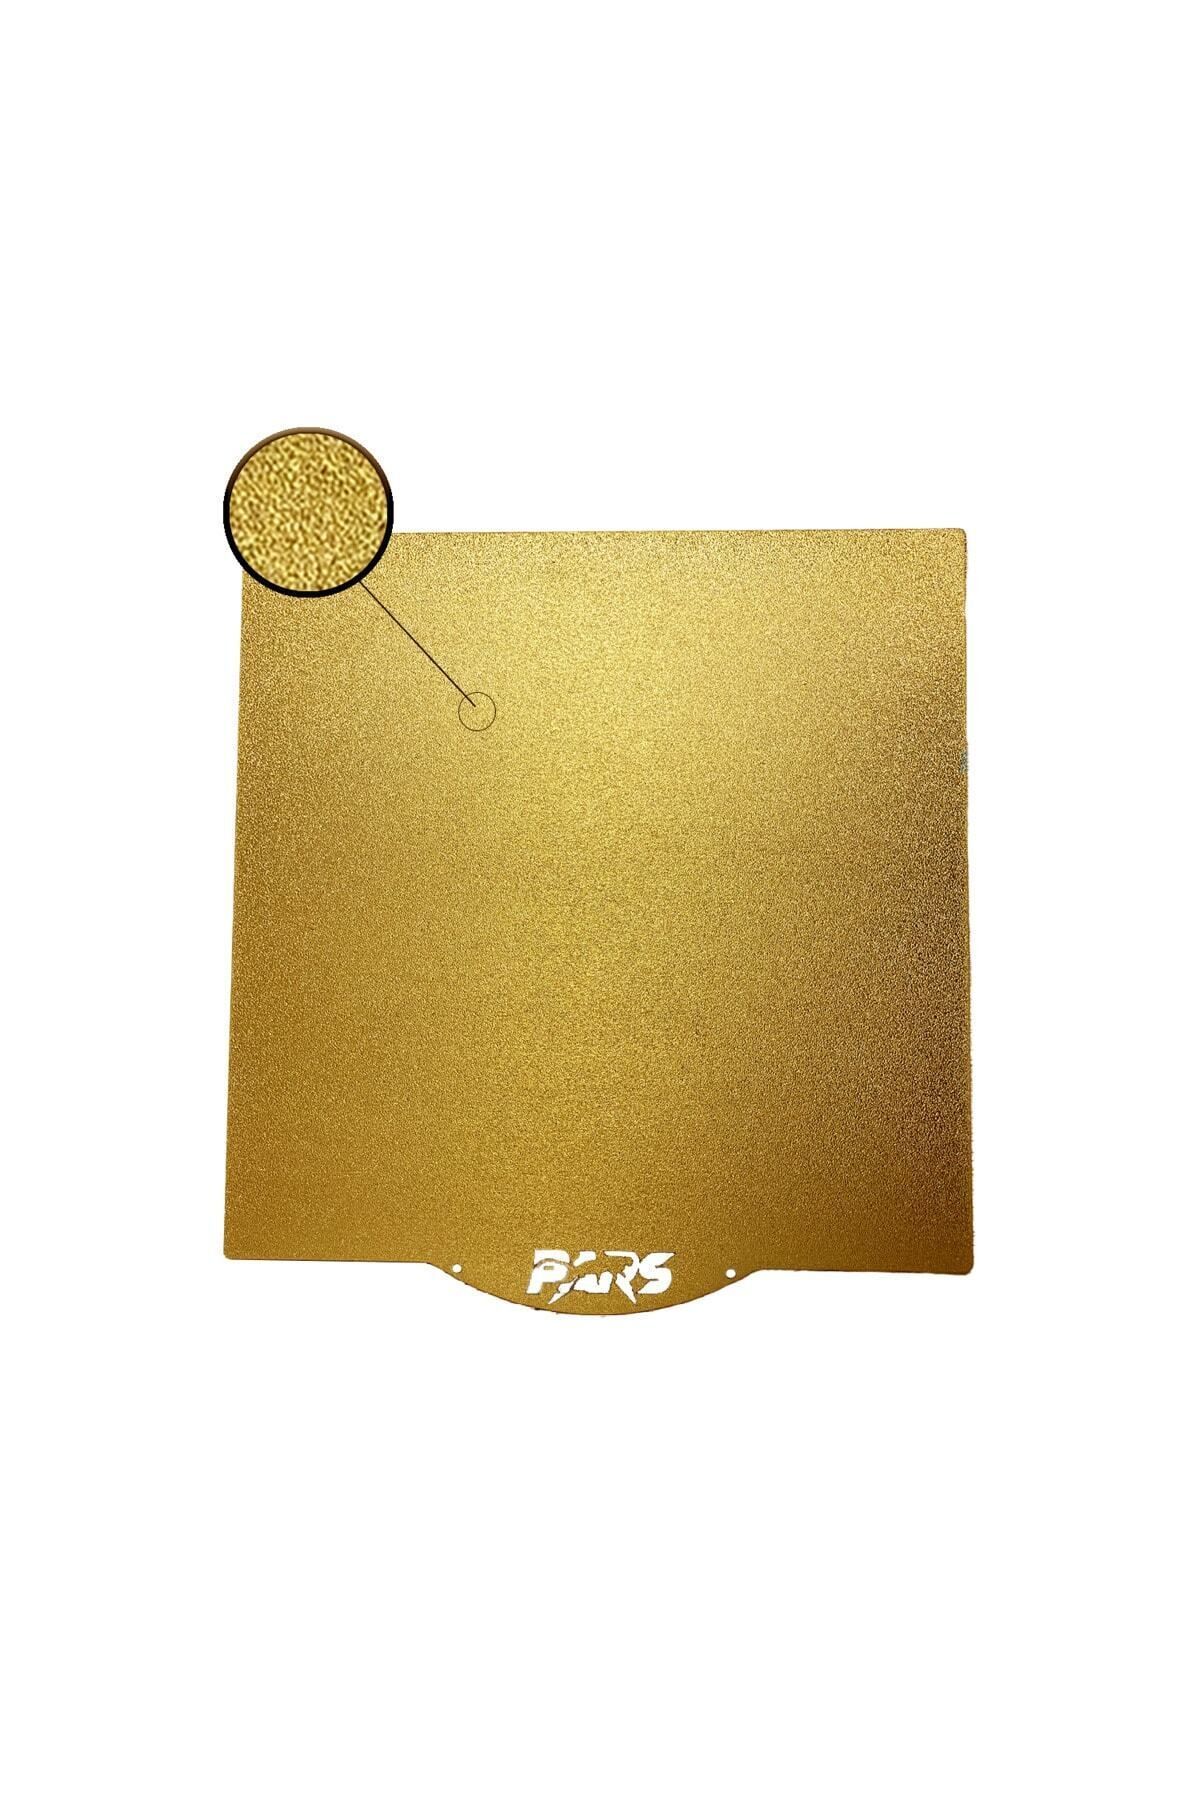 Pars 275x295 Mm Gold Pei Kaplı Özel Yay Çeliği Tabla Magnetsiz